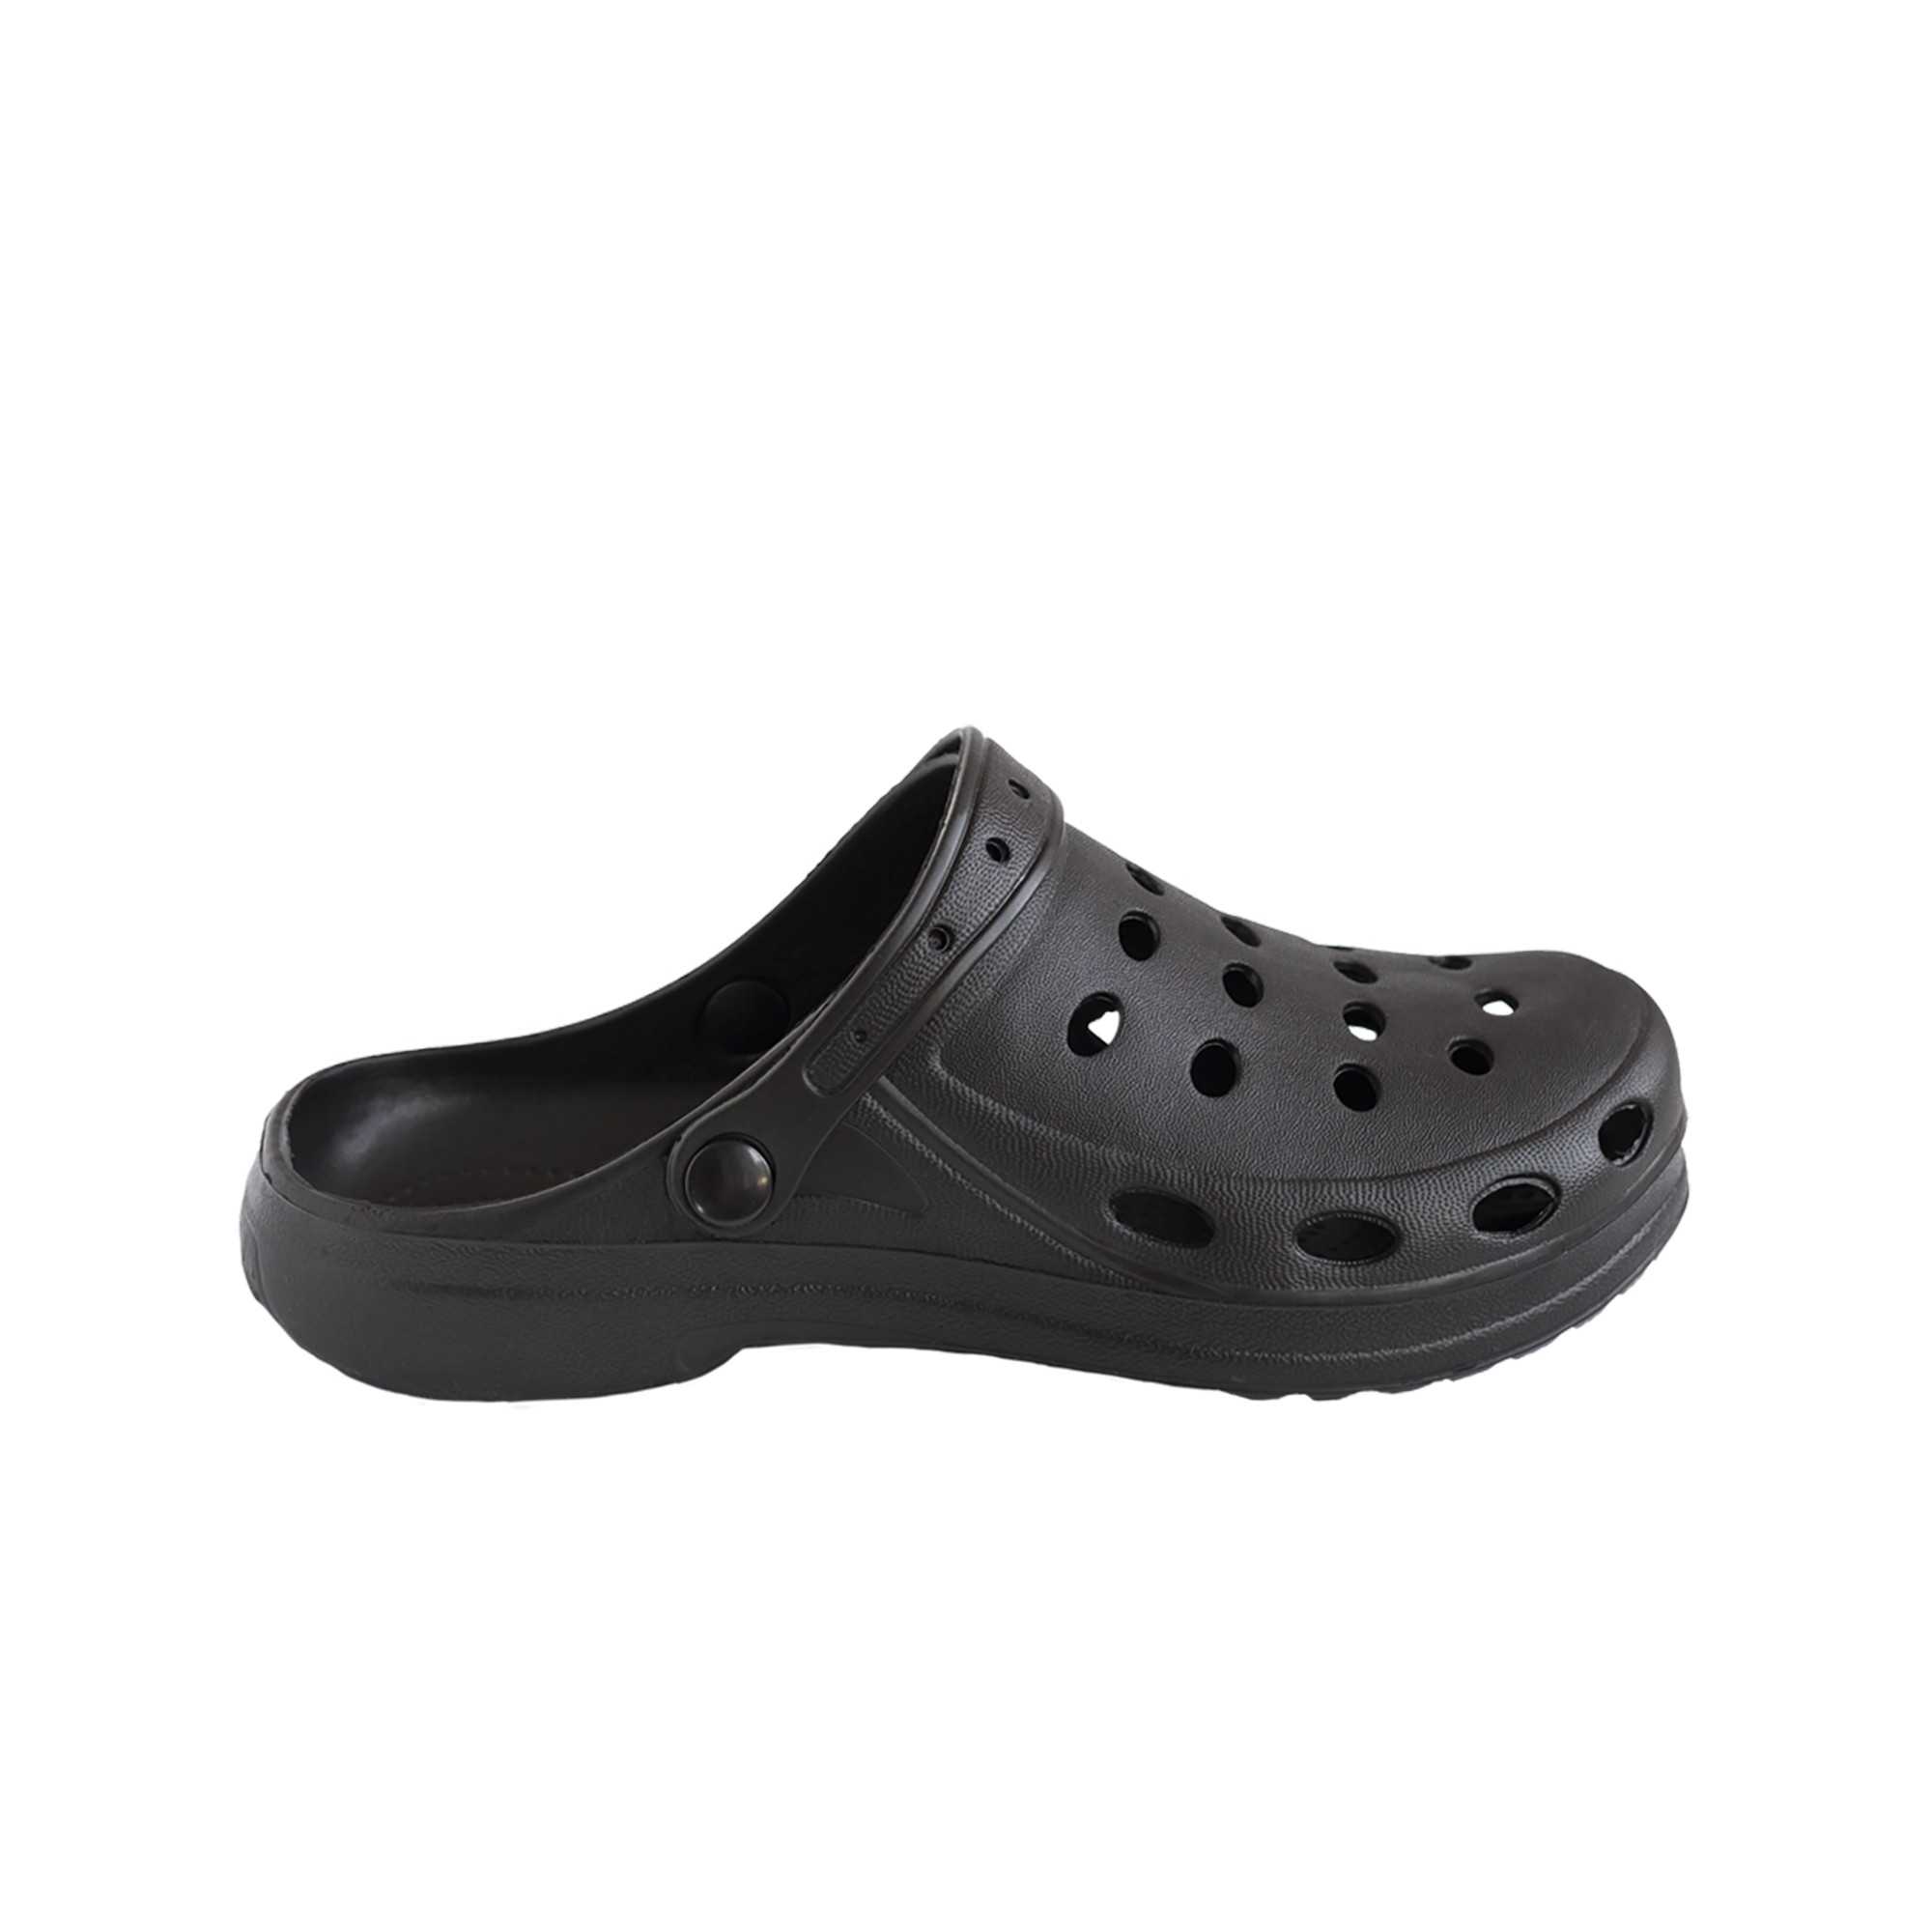 Zuecos Crocs Color Negro | Comprar Zuecos Tipo Crocs Online